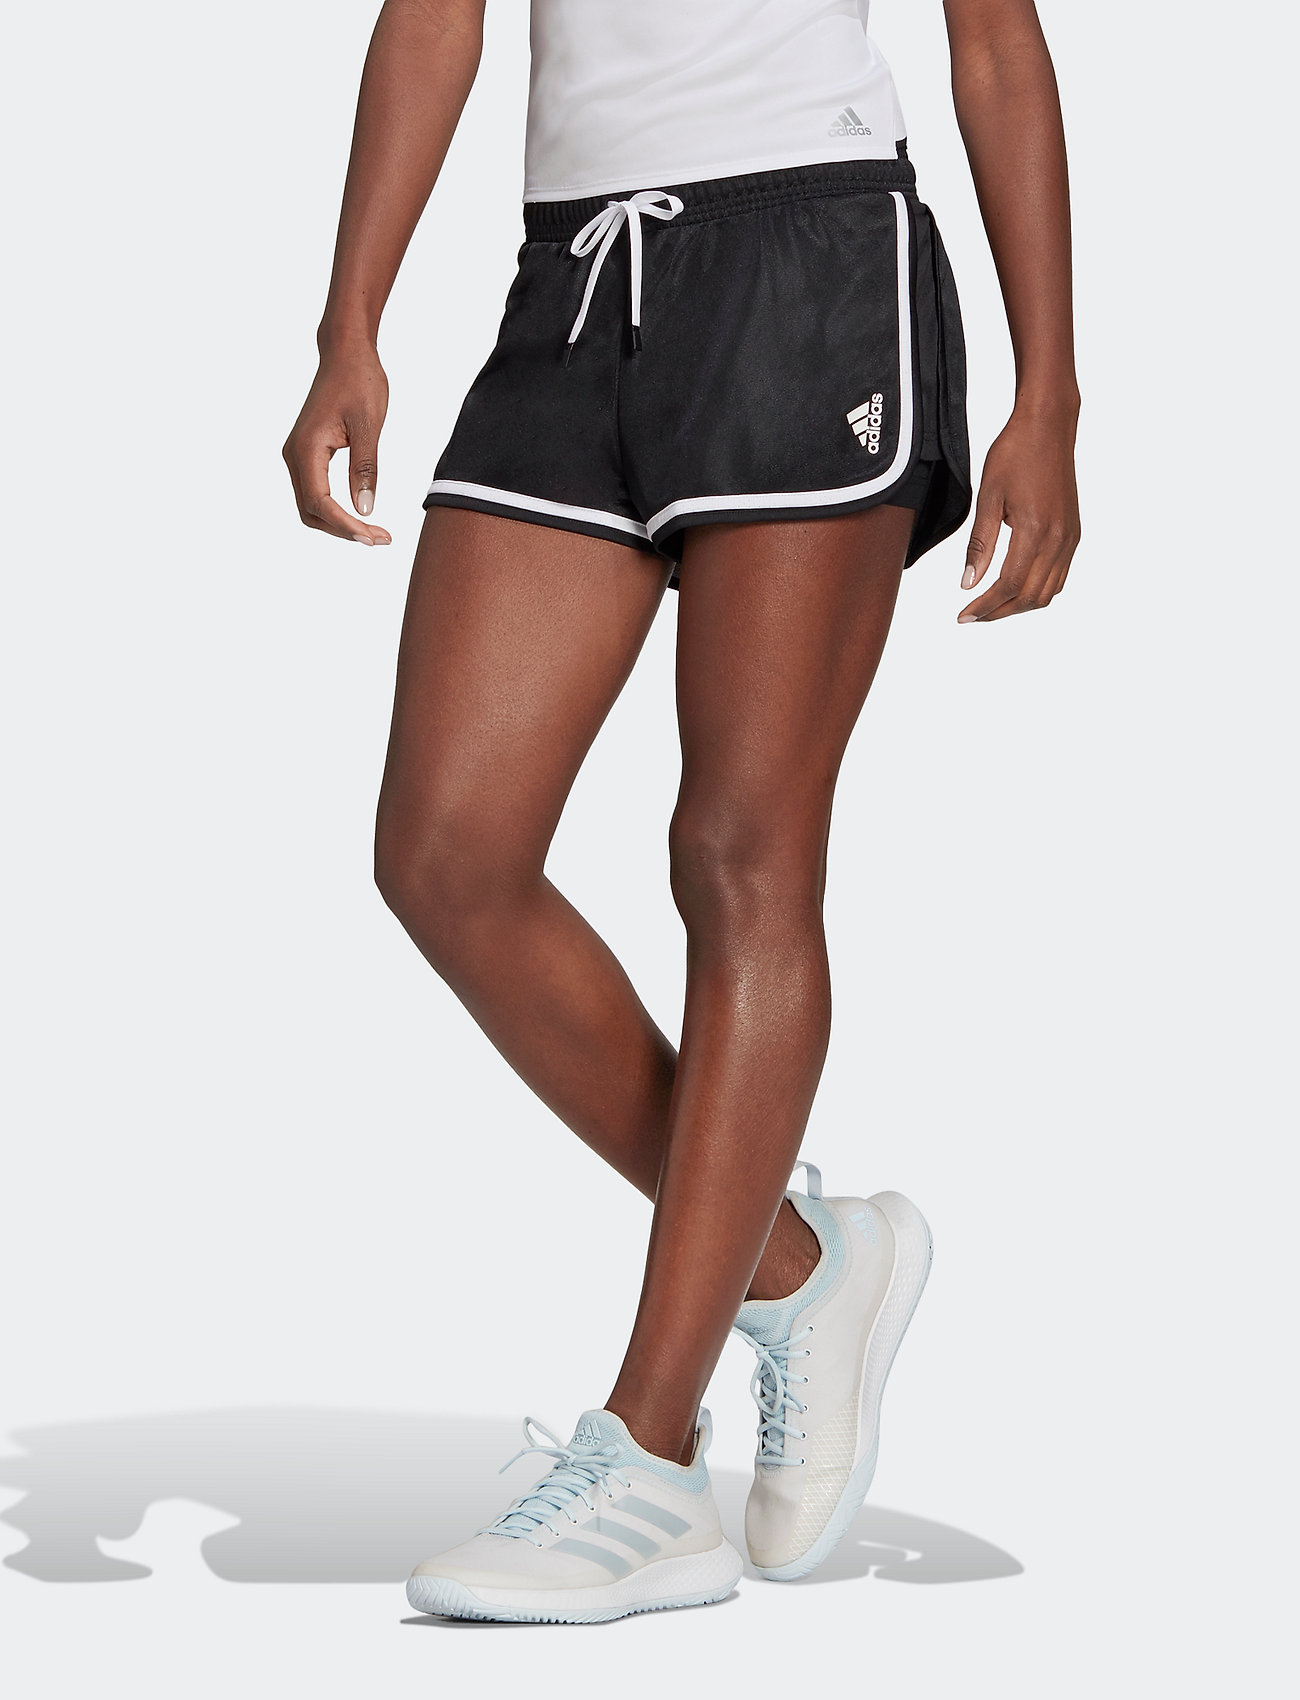 Short club. Adidas AEROREADY шорты теннисные. Теннисные шорты адидас черные. Шорты adidas Performance. Шорты женские адидас для тенниса.